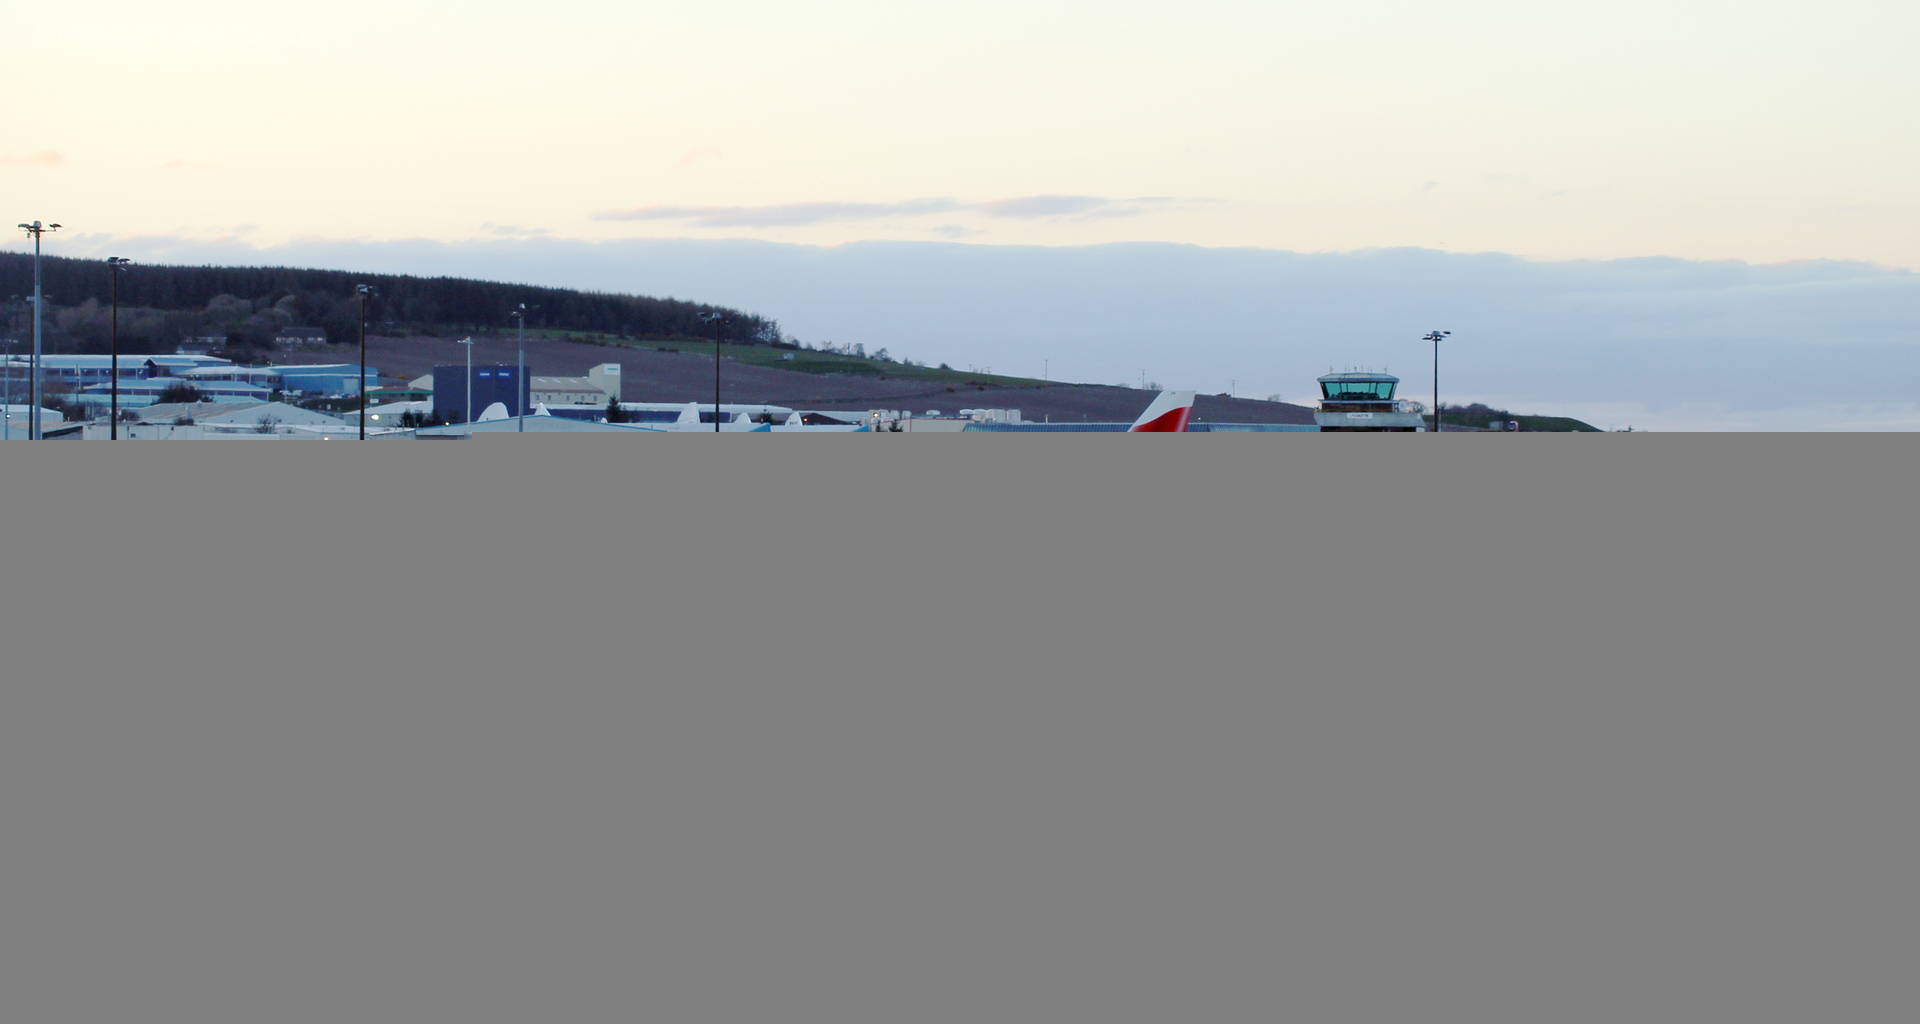 Aberdeen Airport, Aberdeen, Scotland United Kingdom (EGPD) - Main apron at Aberdeen EGPD